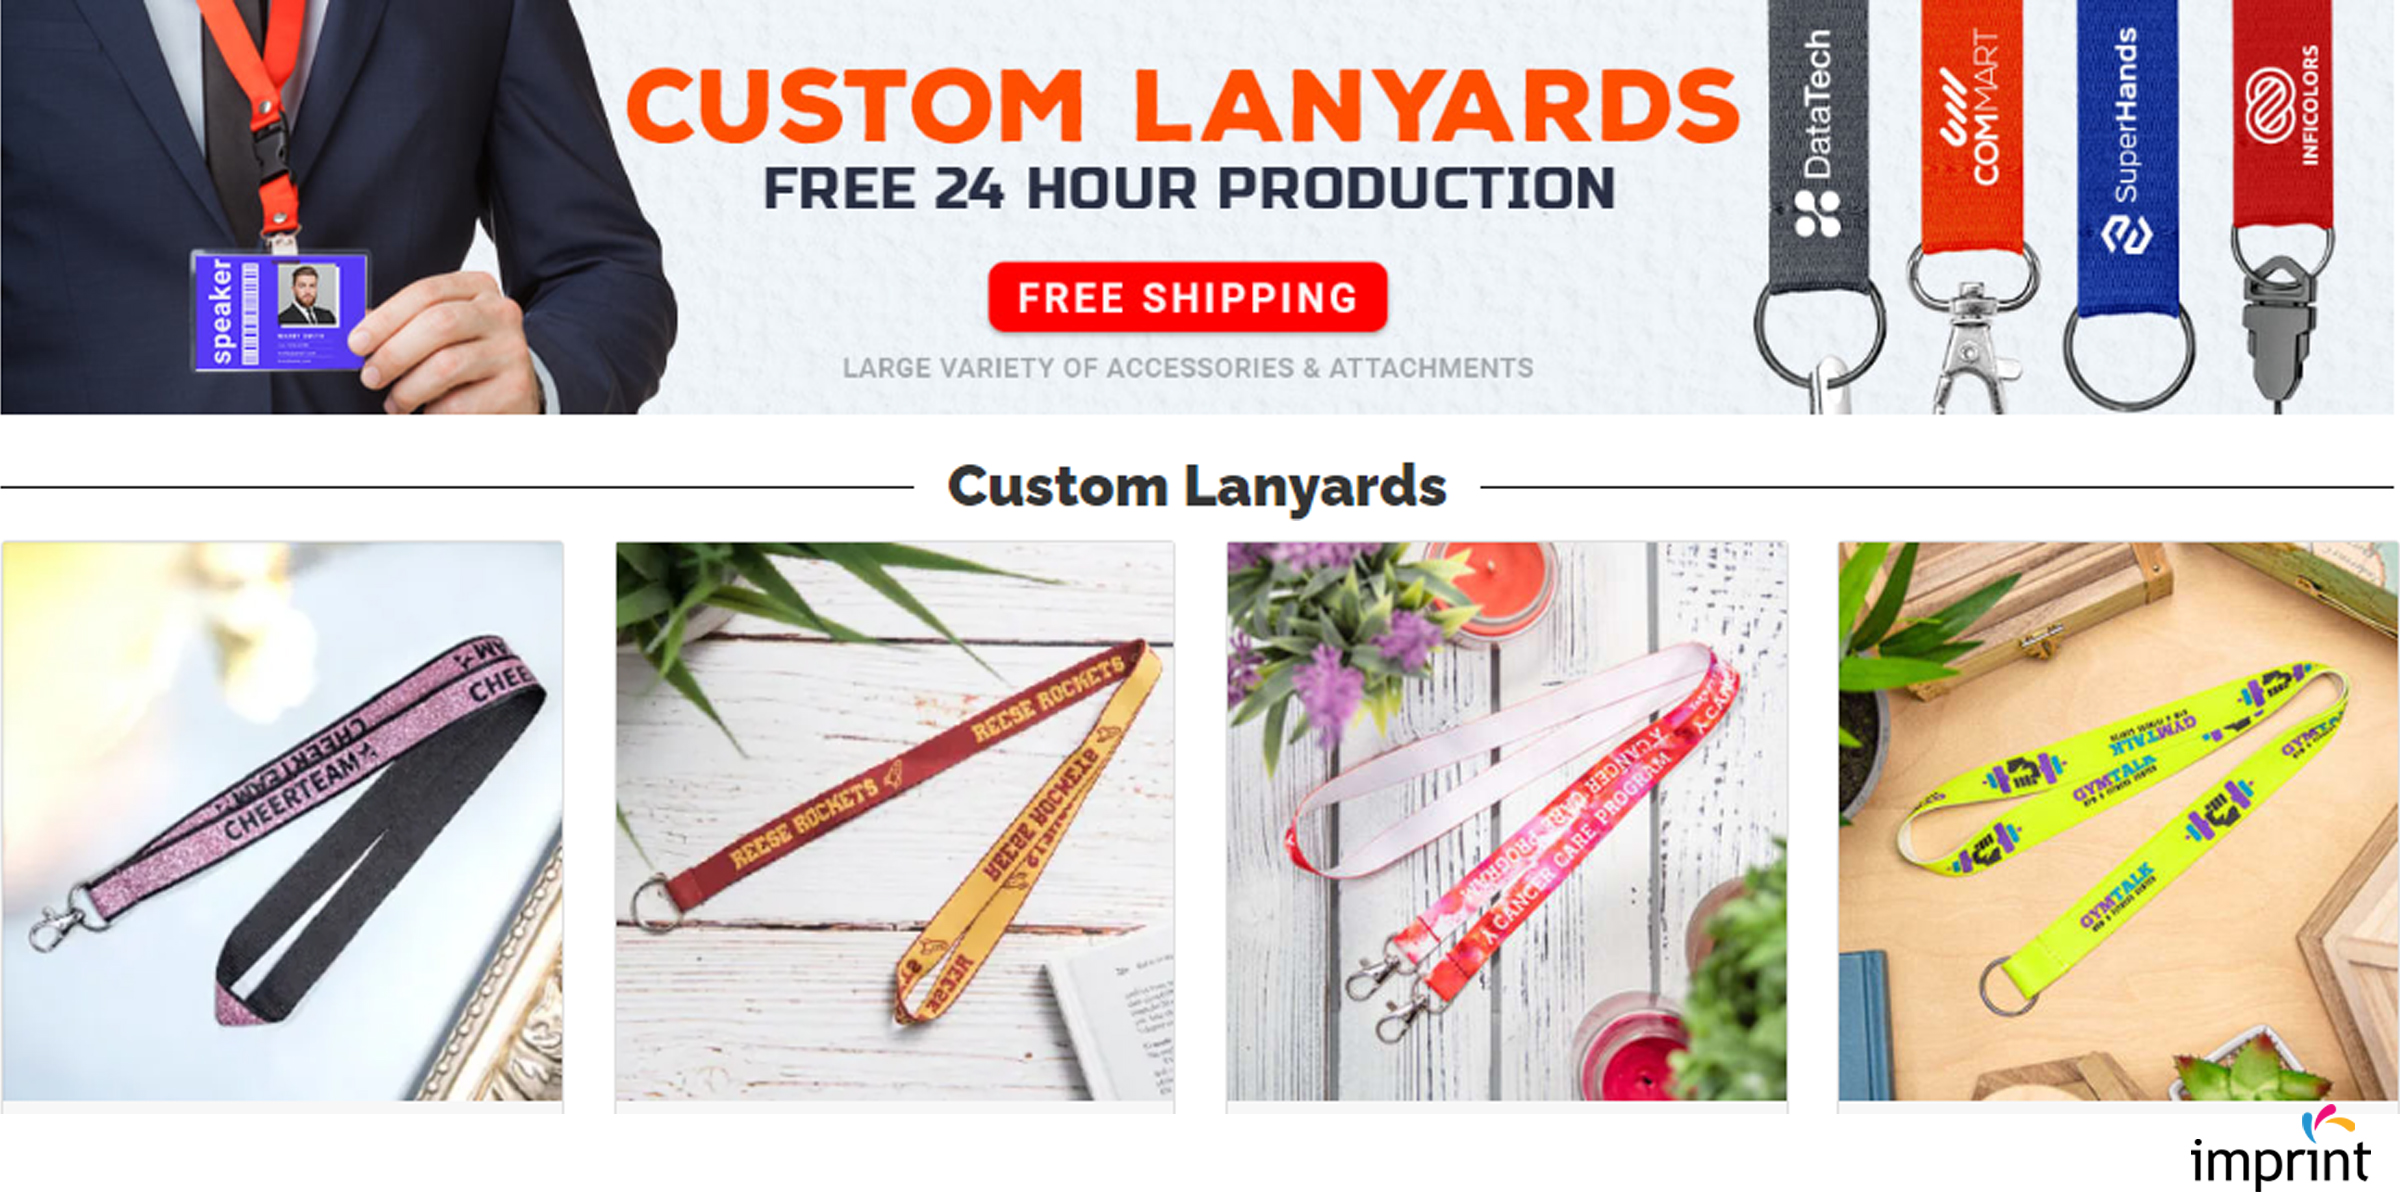 imprint-custom-lanyard